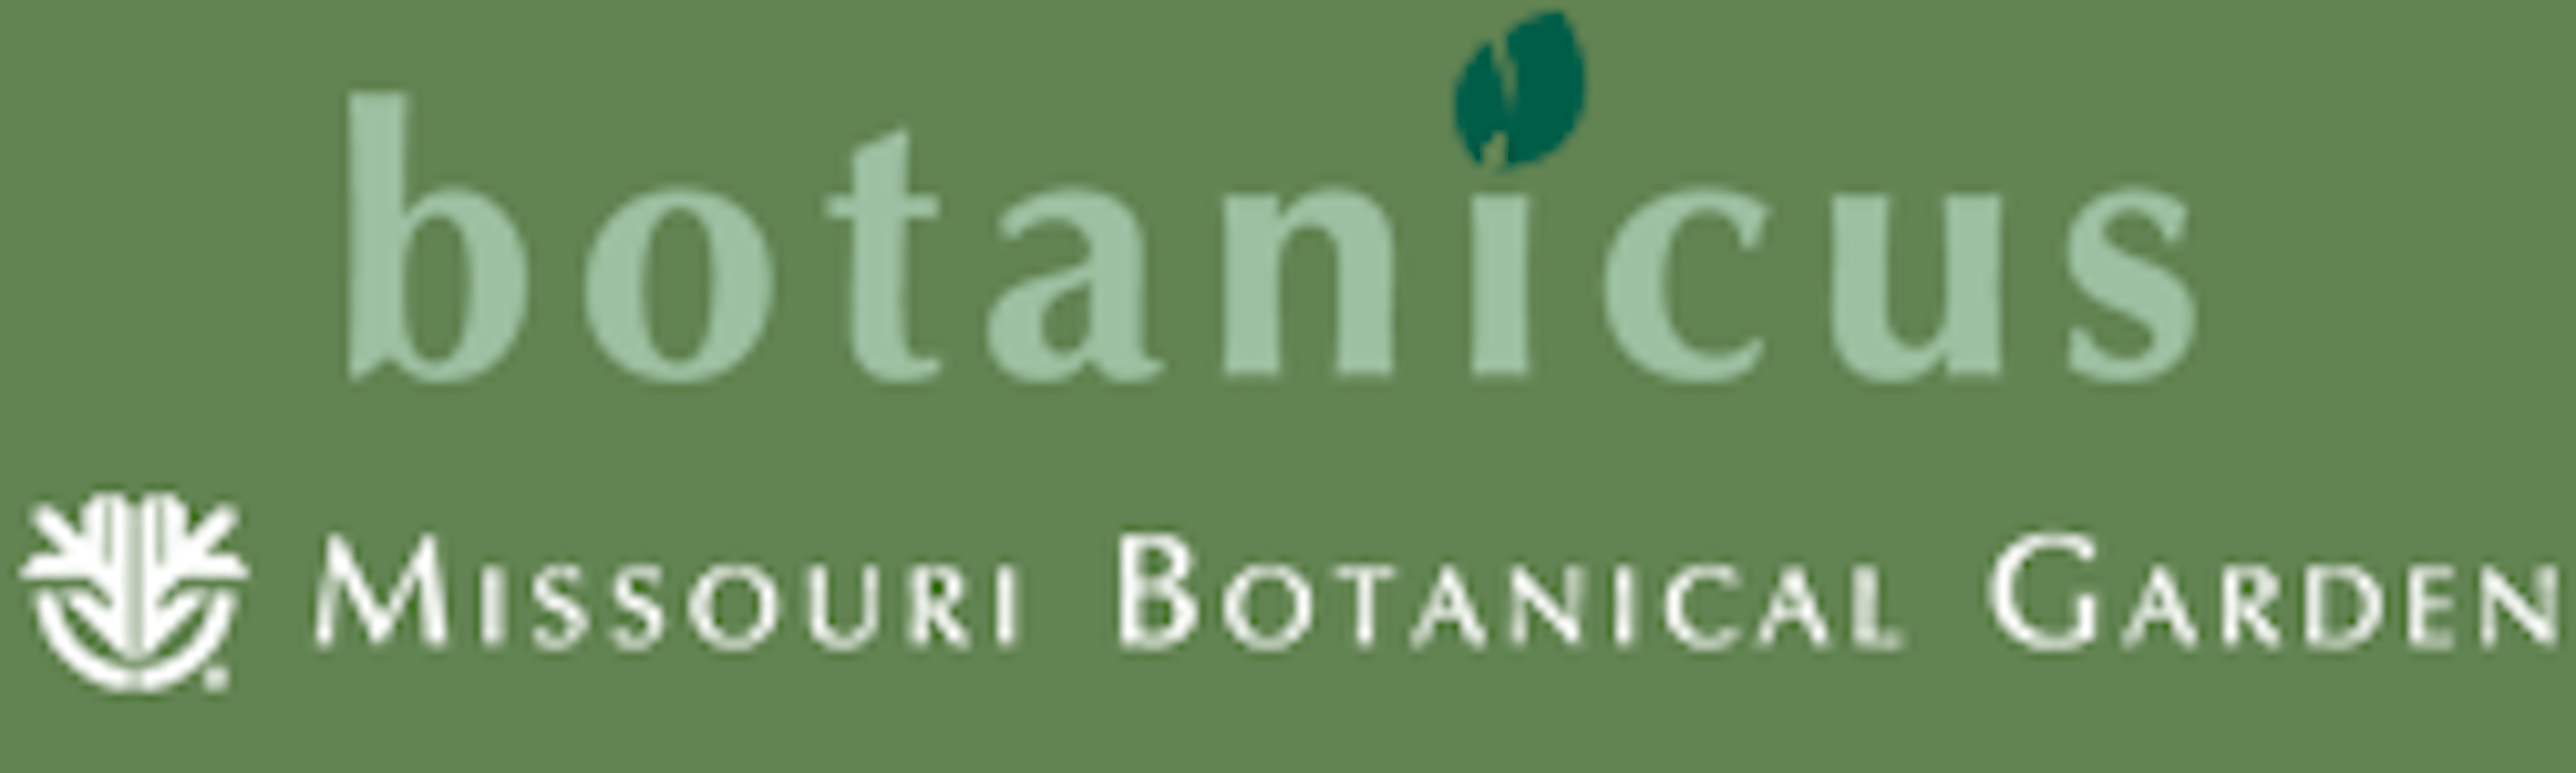 Botanicus logo